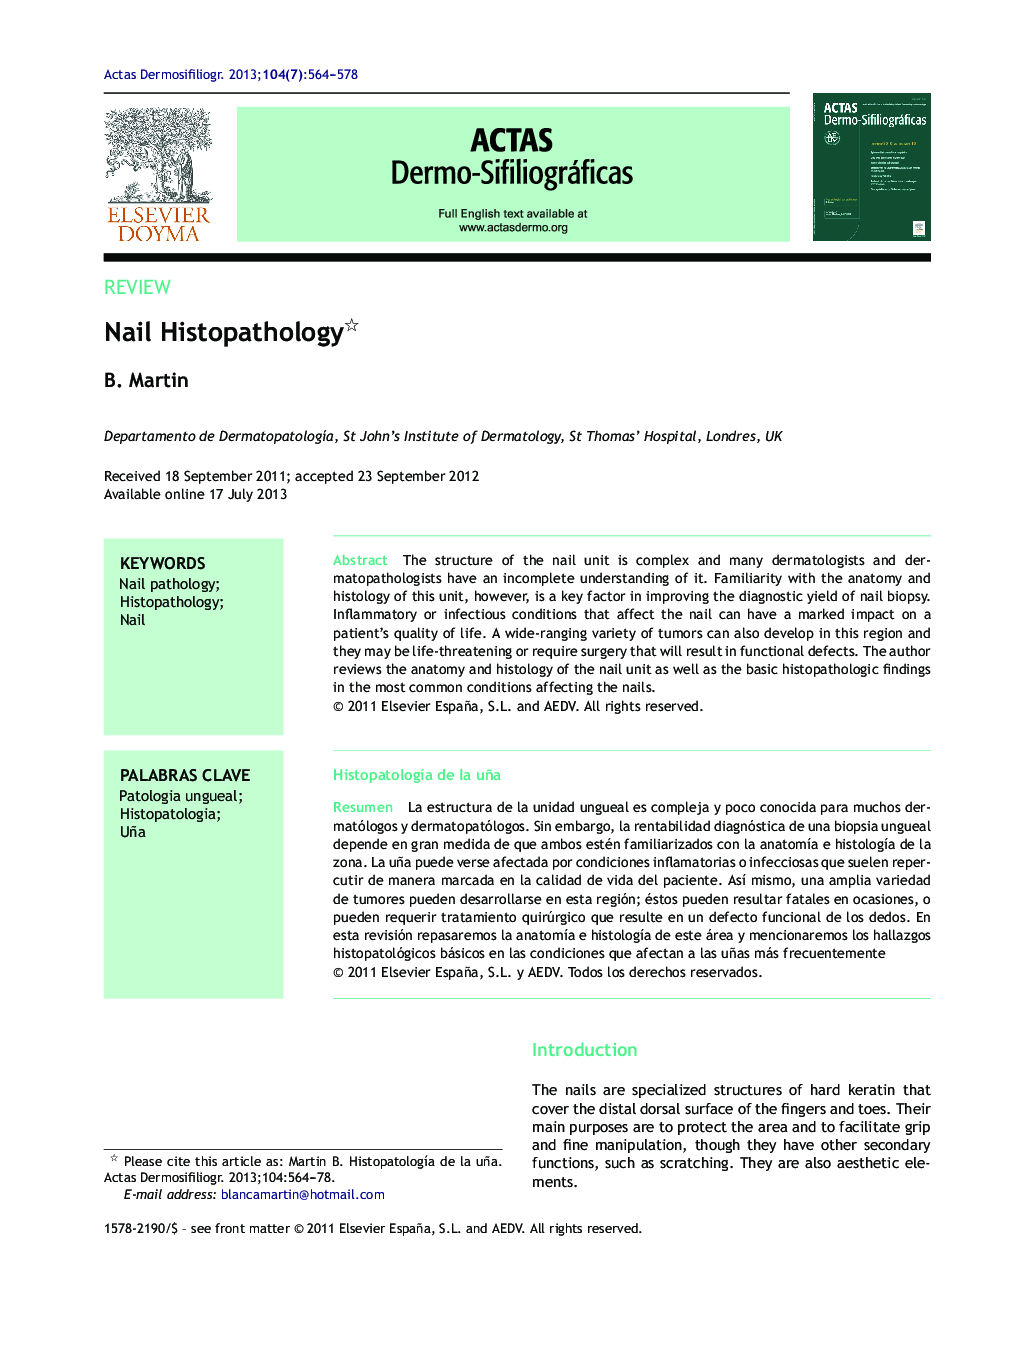 Nail Histopathology 